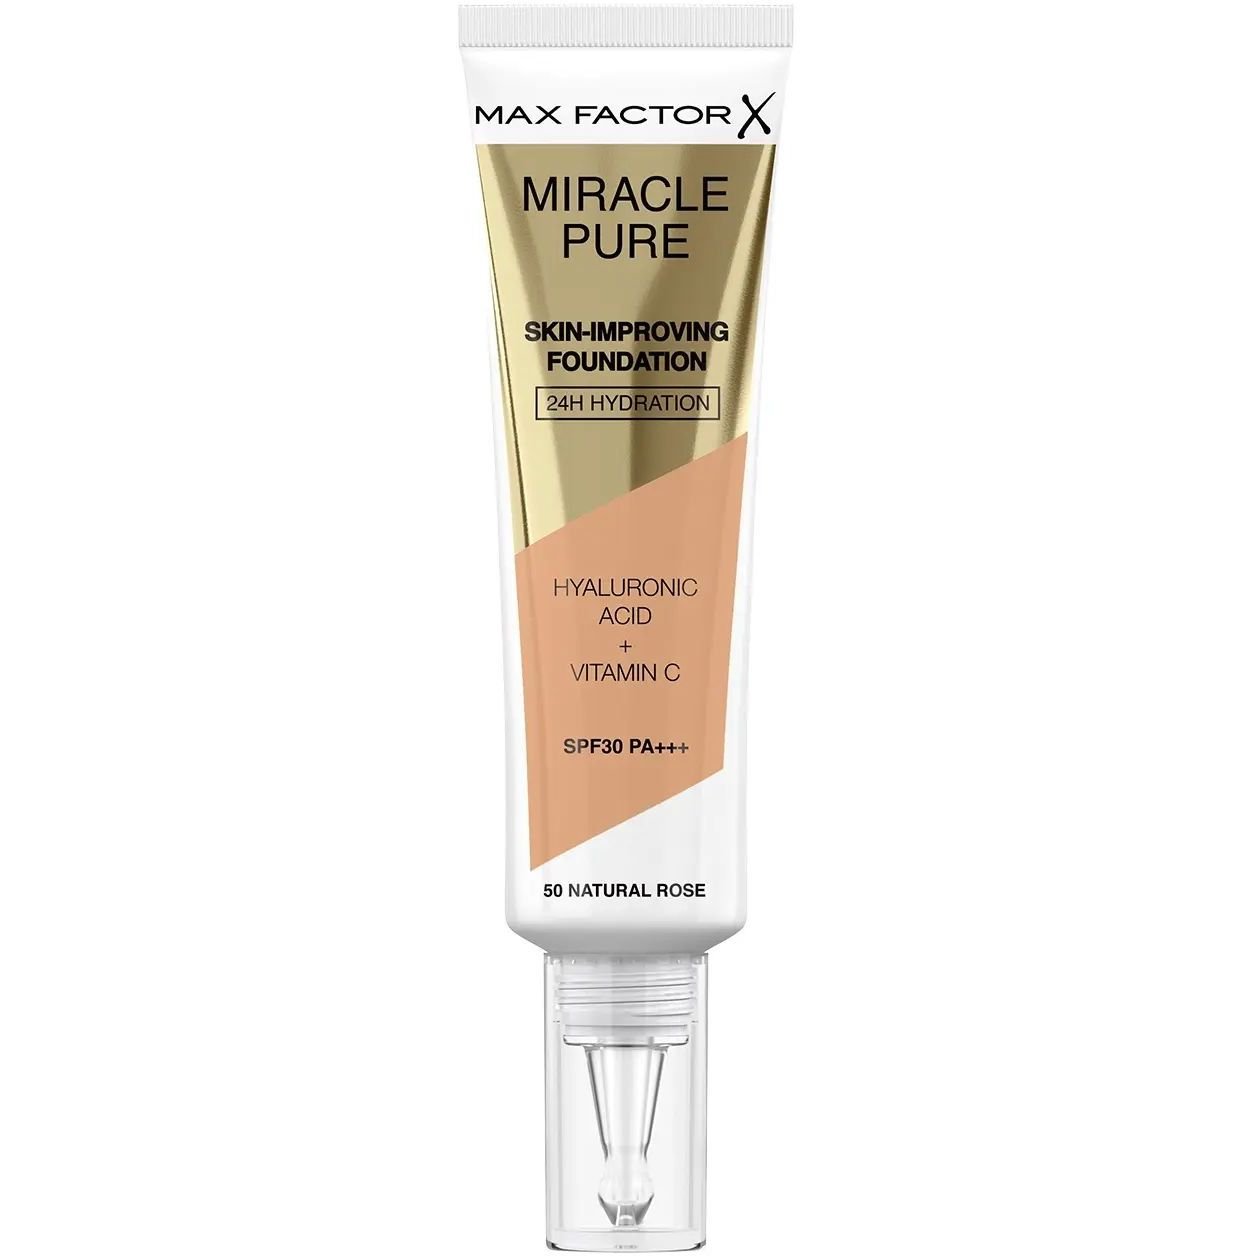 Тональная основа Max Factor Miracle Pure Skin-Improving Foundation SPF30 тон 050 (Natural Rose) 30 мл - фото 1